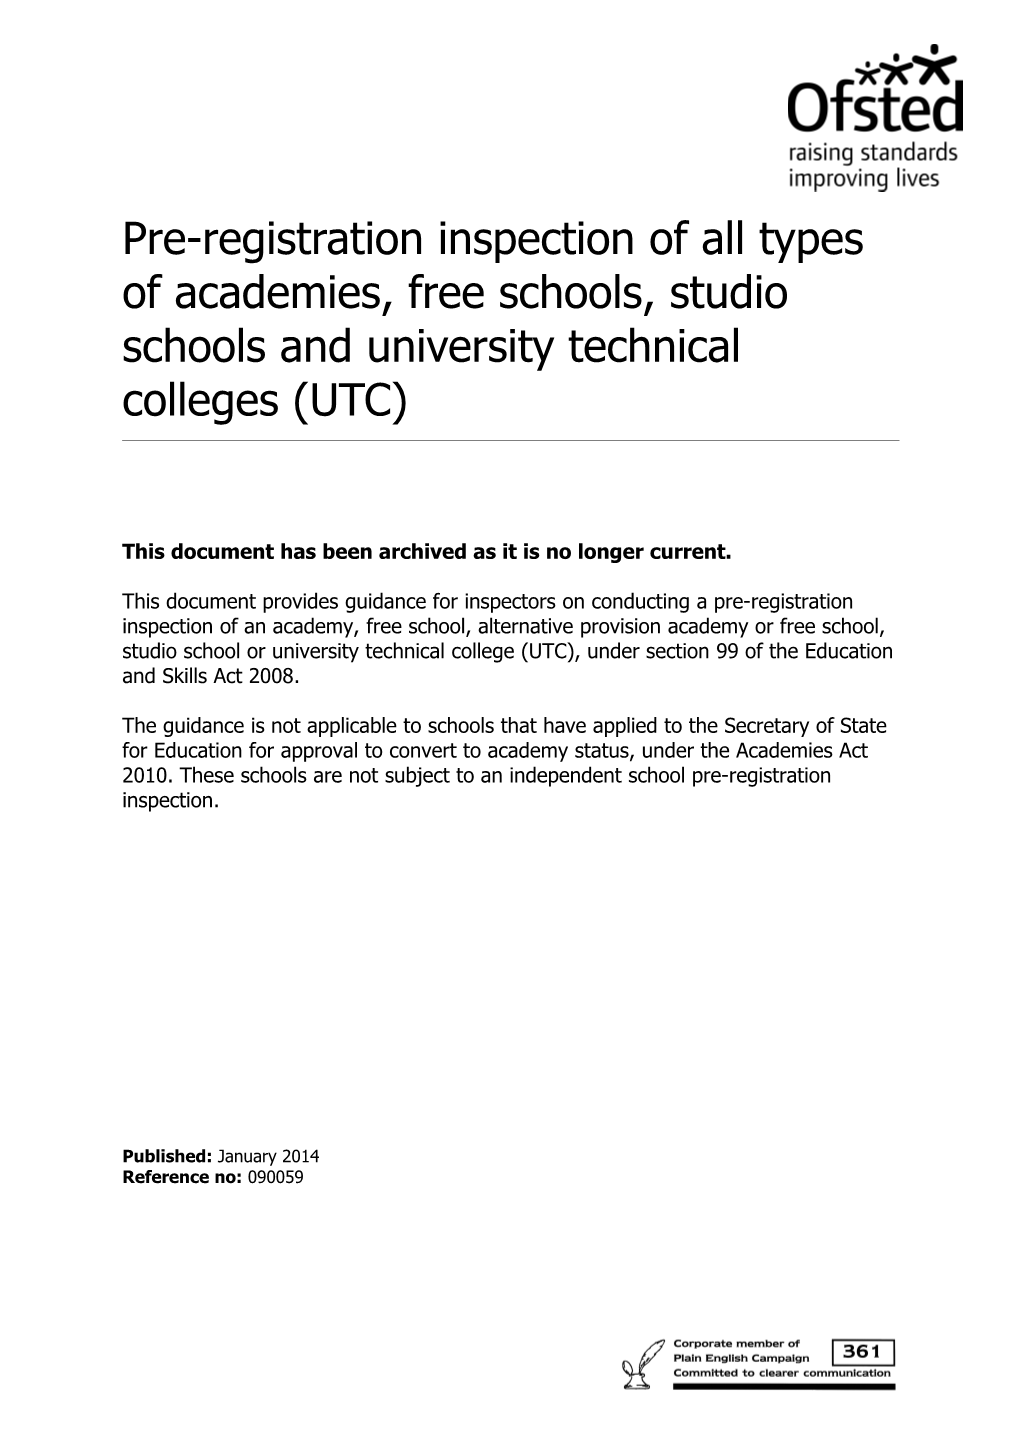 2.7 Pre-Registration Inspections to Academies Free Schools Studio Schools Utcs